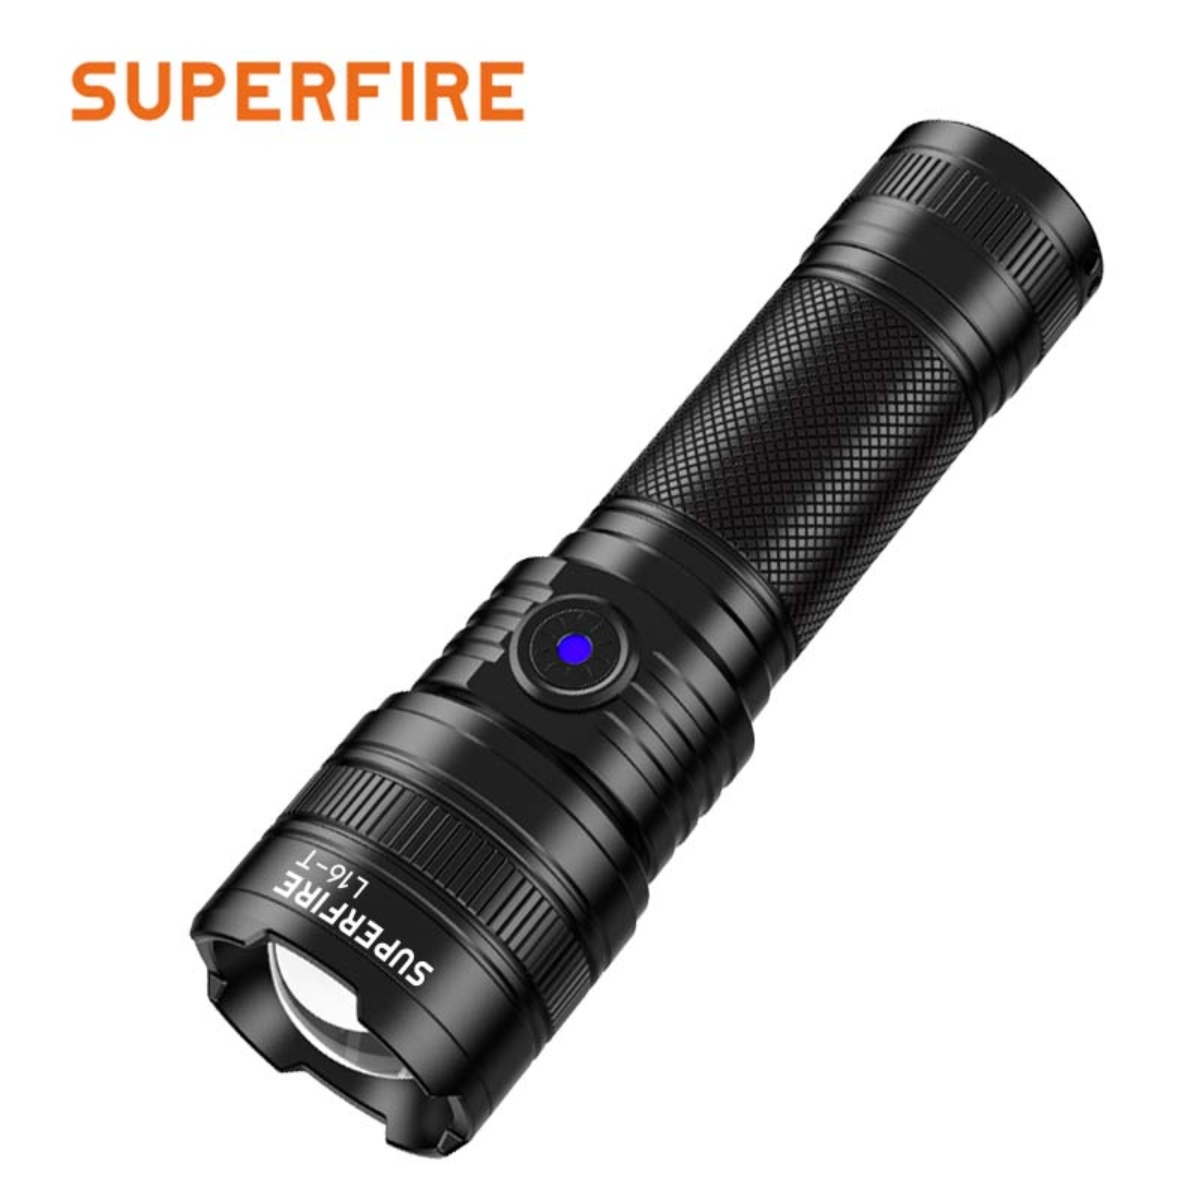 The Best Bright Telescopic Tactical Flashlight - Superfire